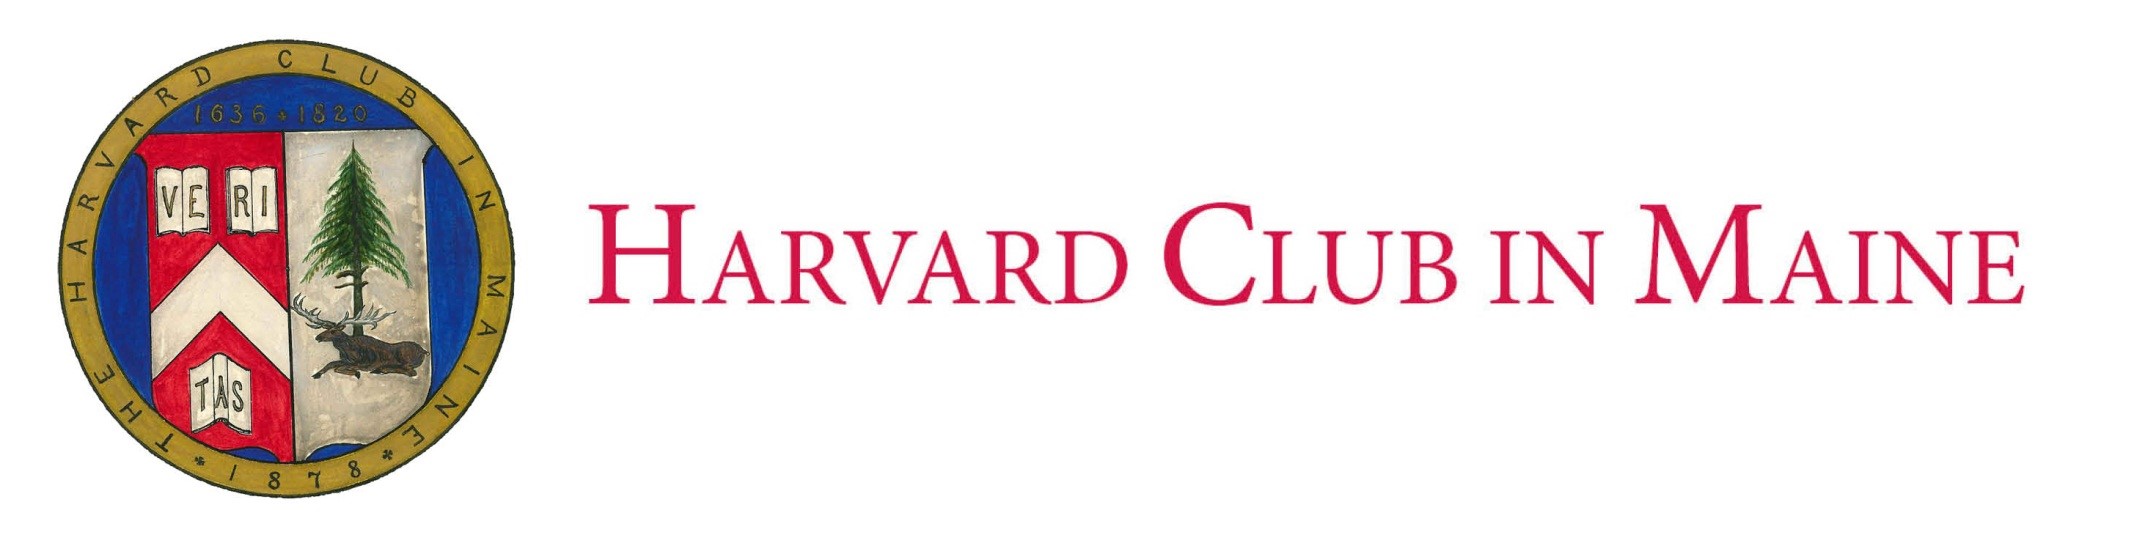 Harvard Club in Maine banner